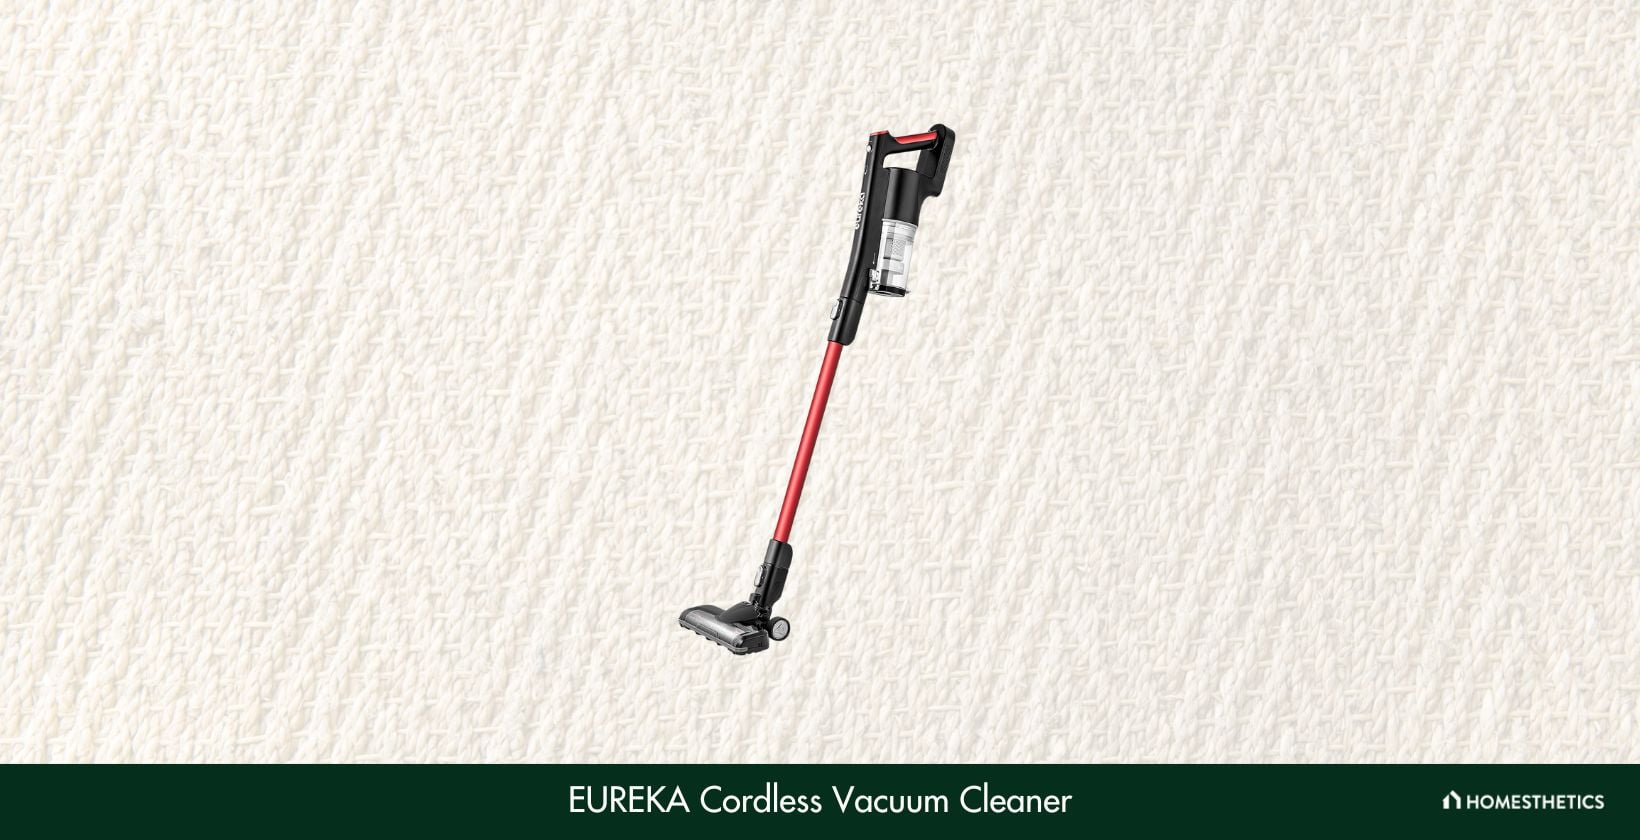 EUREKA Cordless Vacuum Cleaner